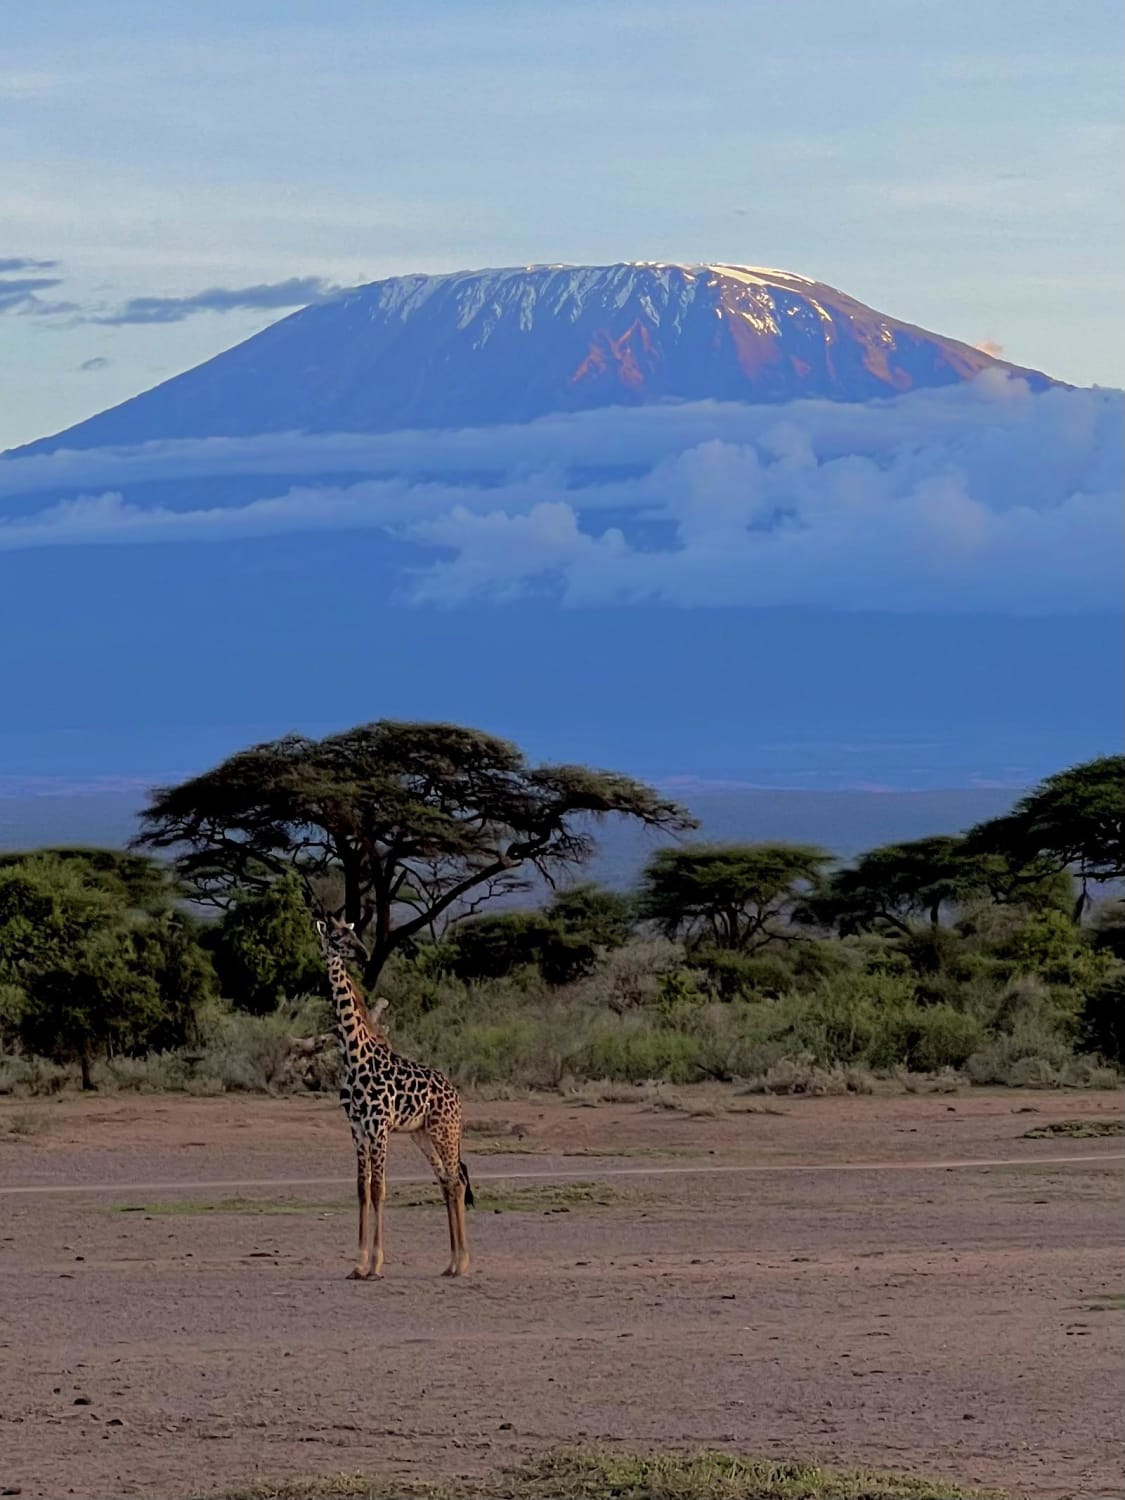 Mount Kilimanjaro in Tanzania from Amboseli National Park in Kenya